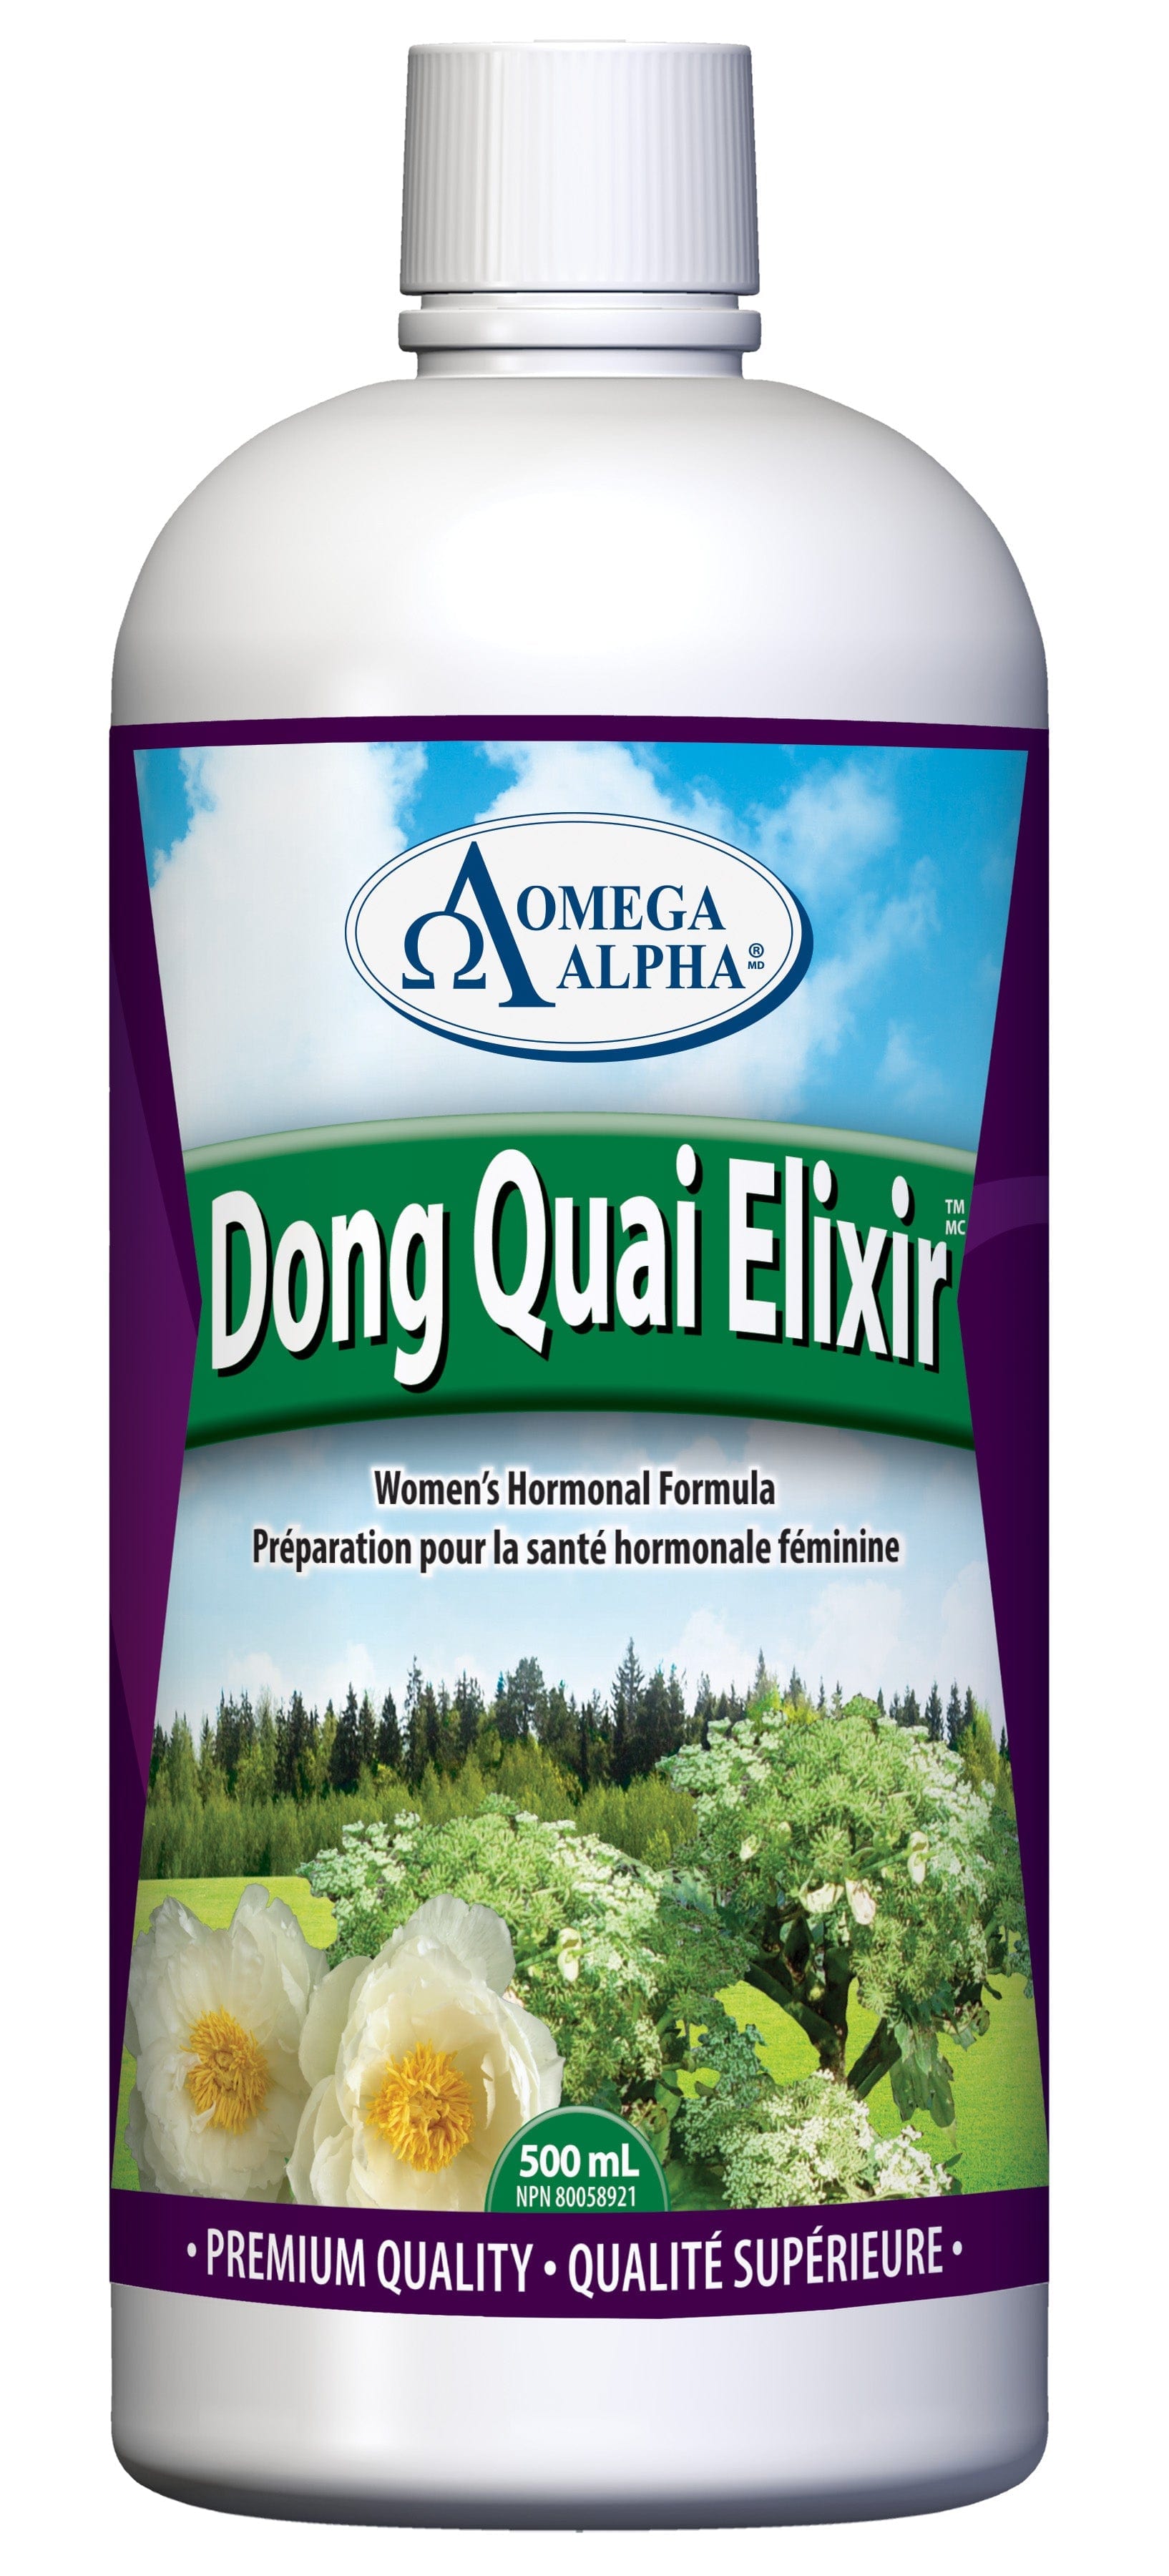 OMÉGA ALPHA PHARMATICAL Suppléments Dong quai elixir (hormones femmes) 500ml